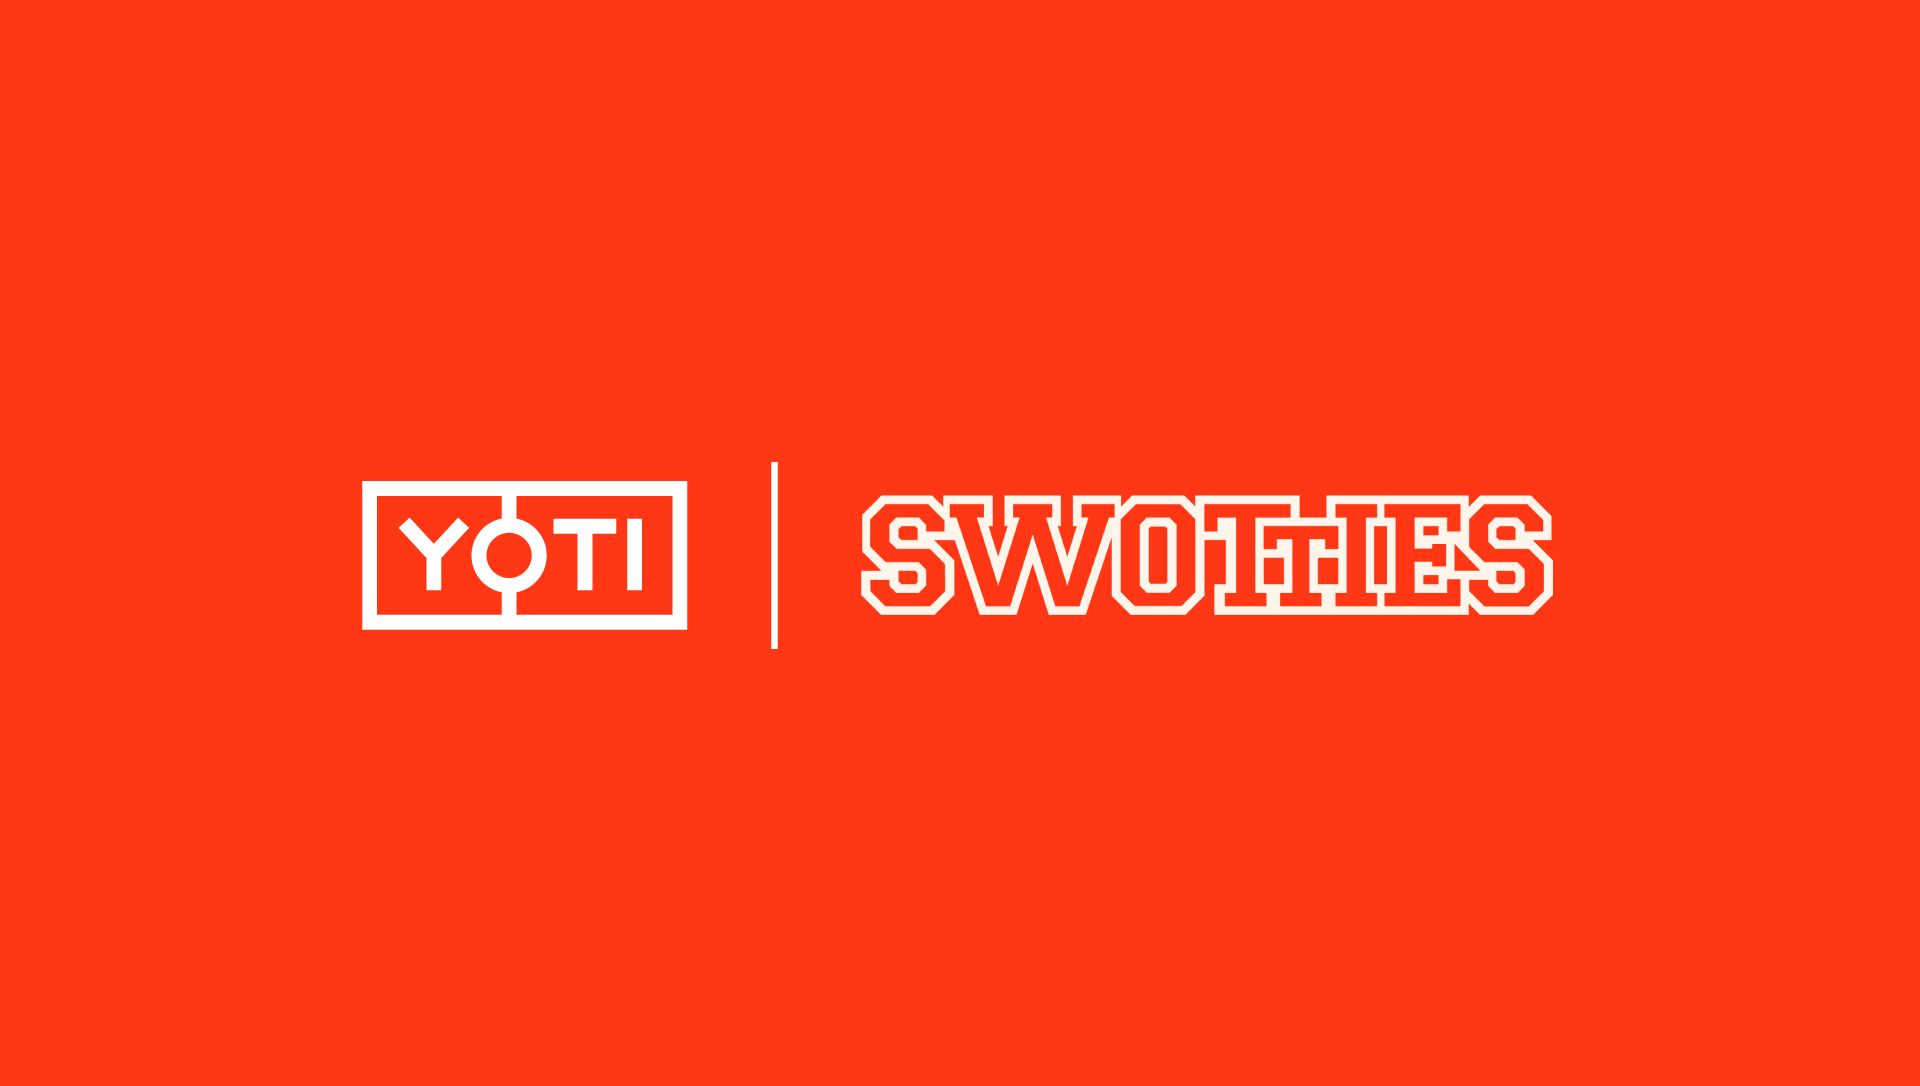 Swotties uses Yoti digital ID to verify the identity of online tutors